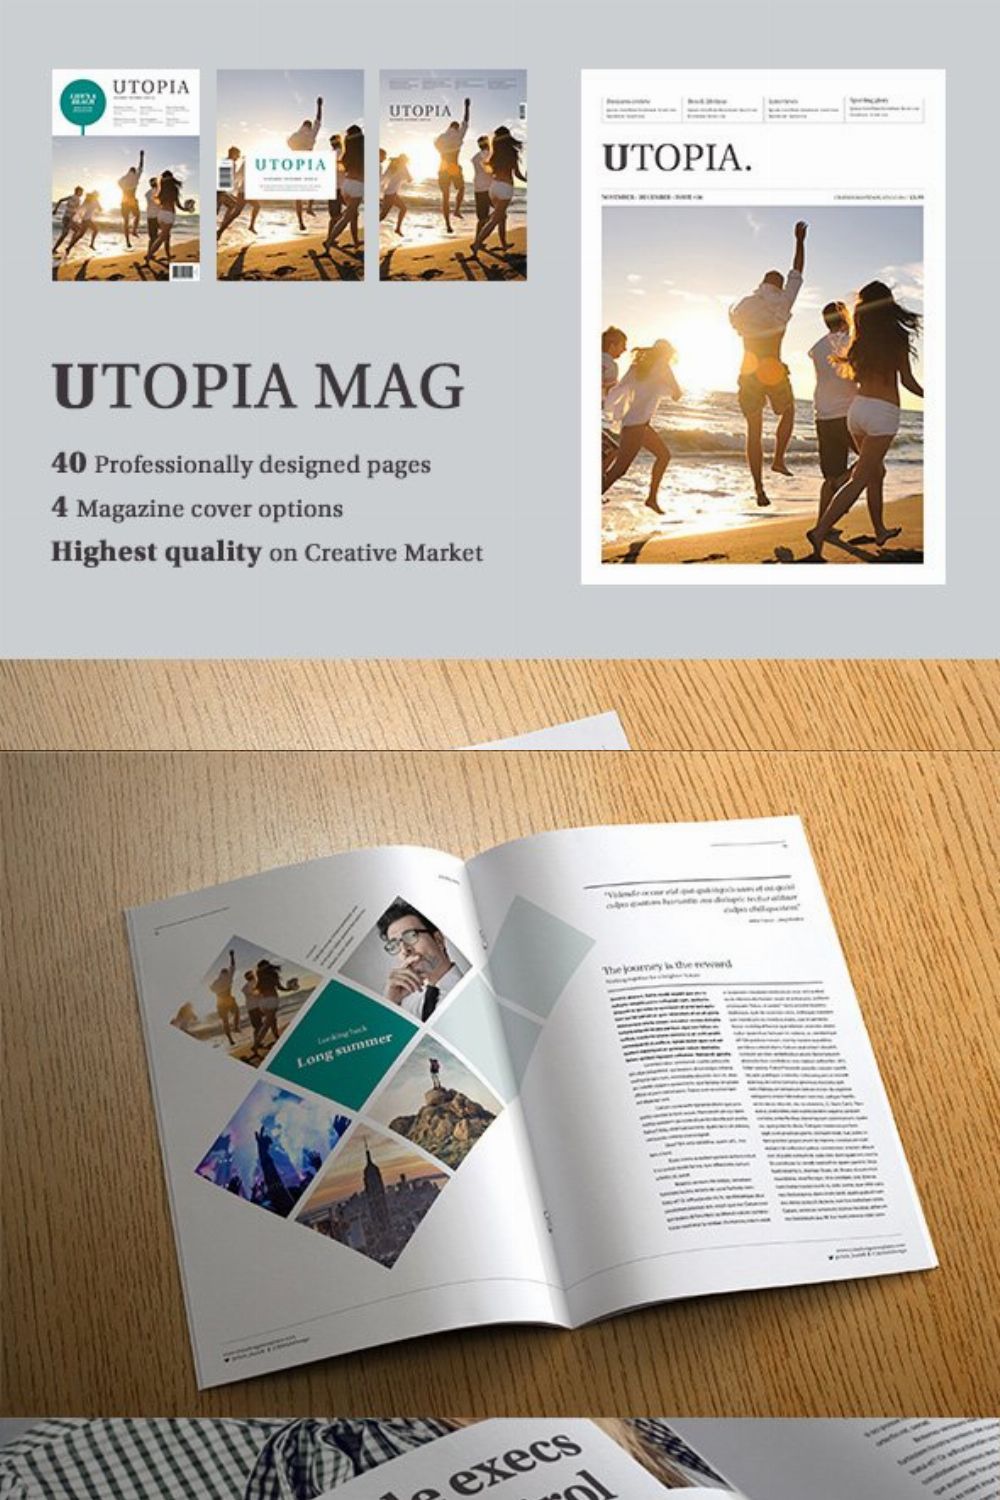 Utopia magazine pinterest preview image.